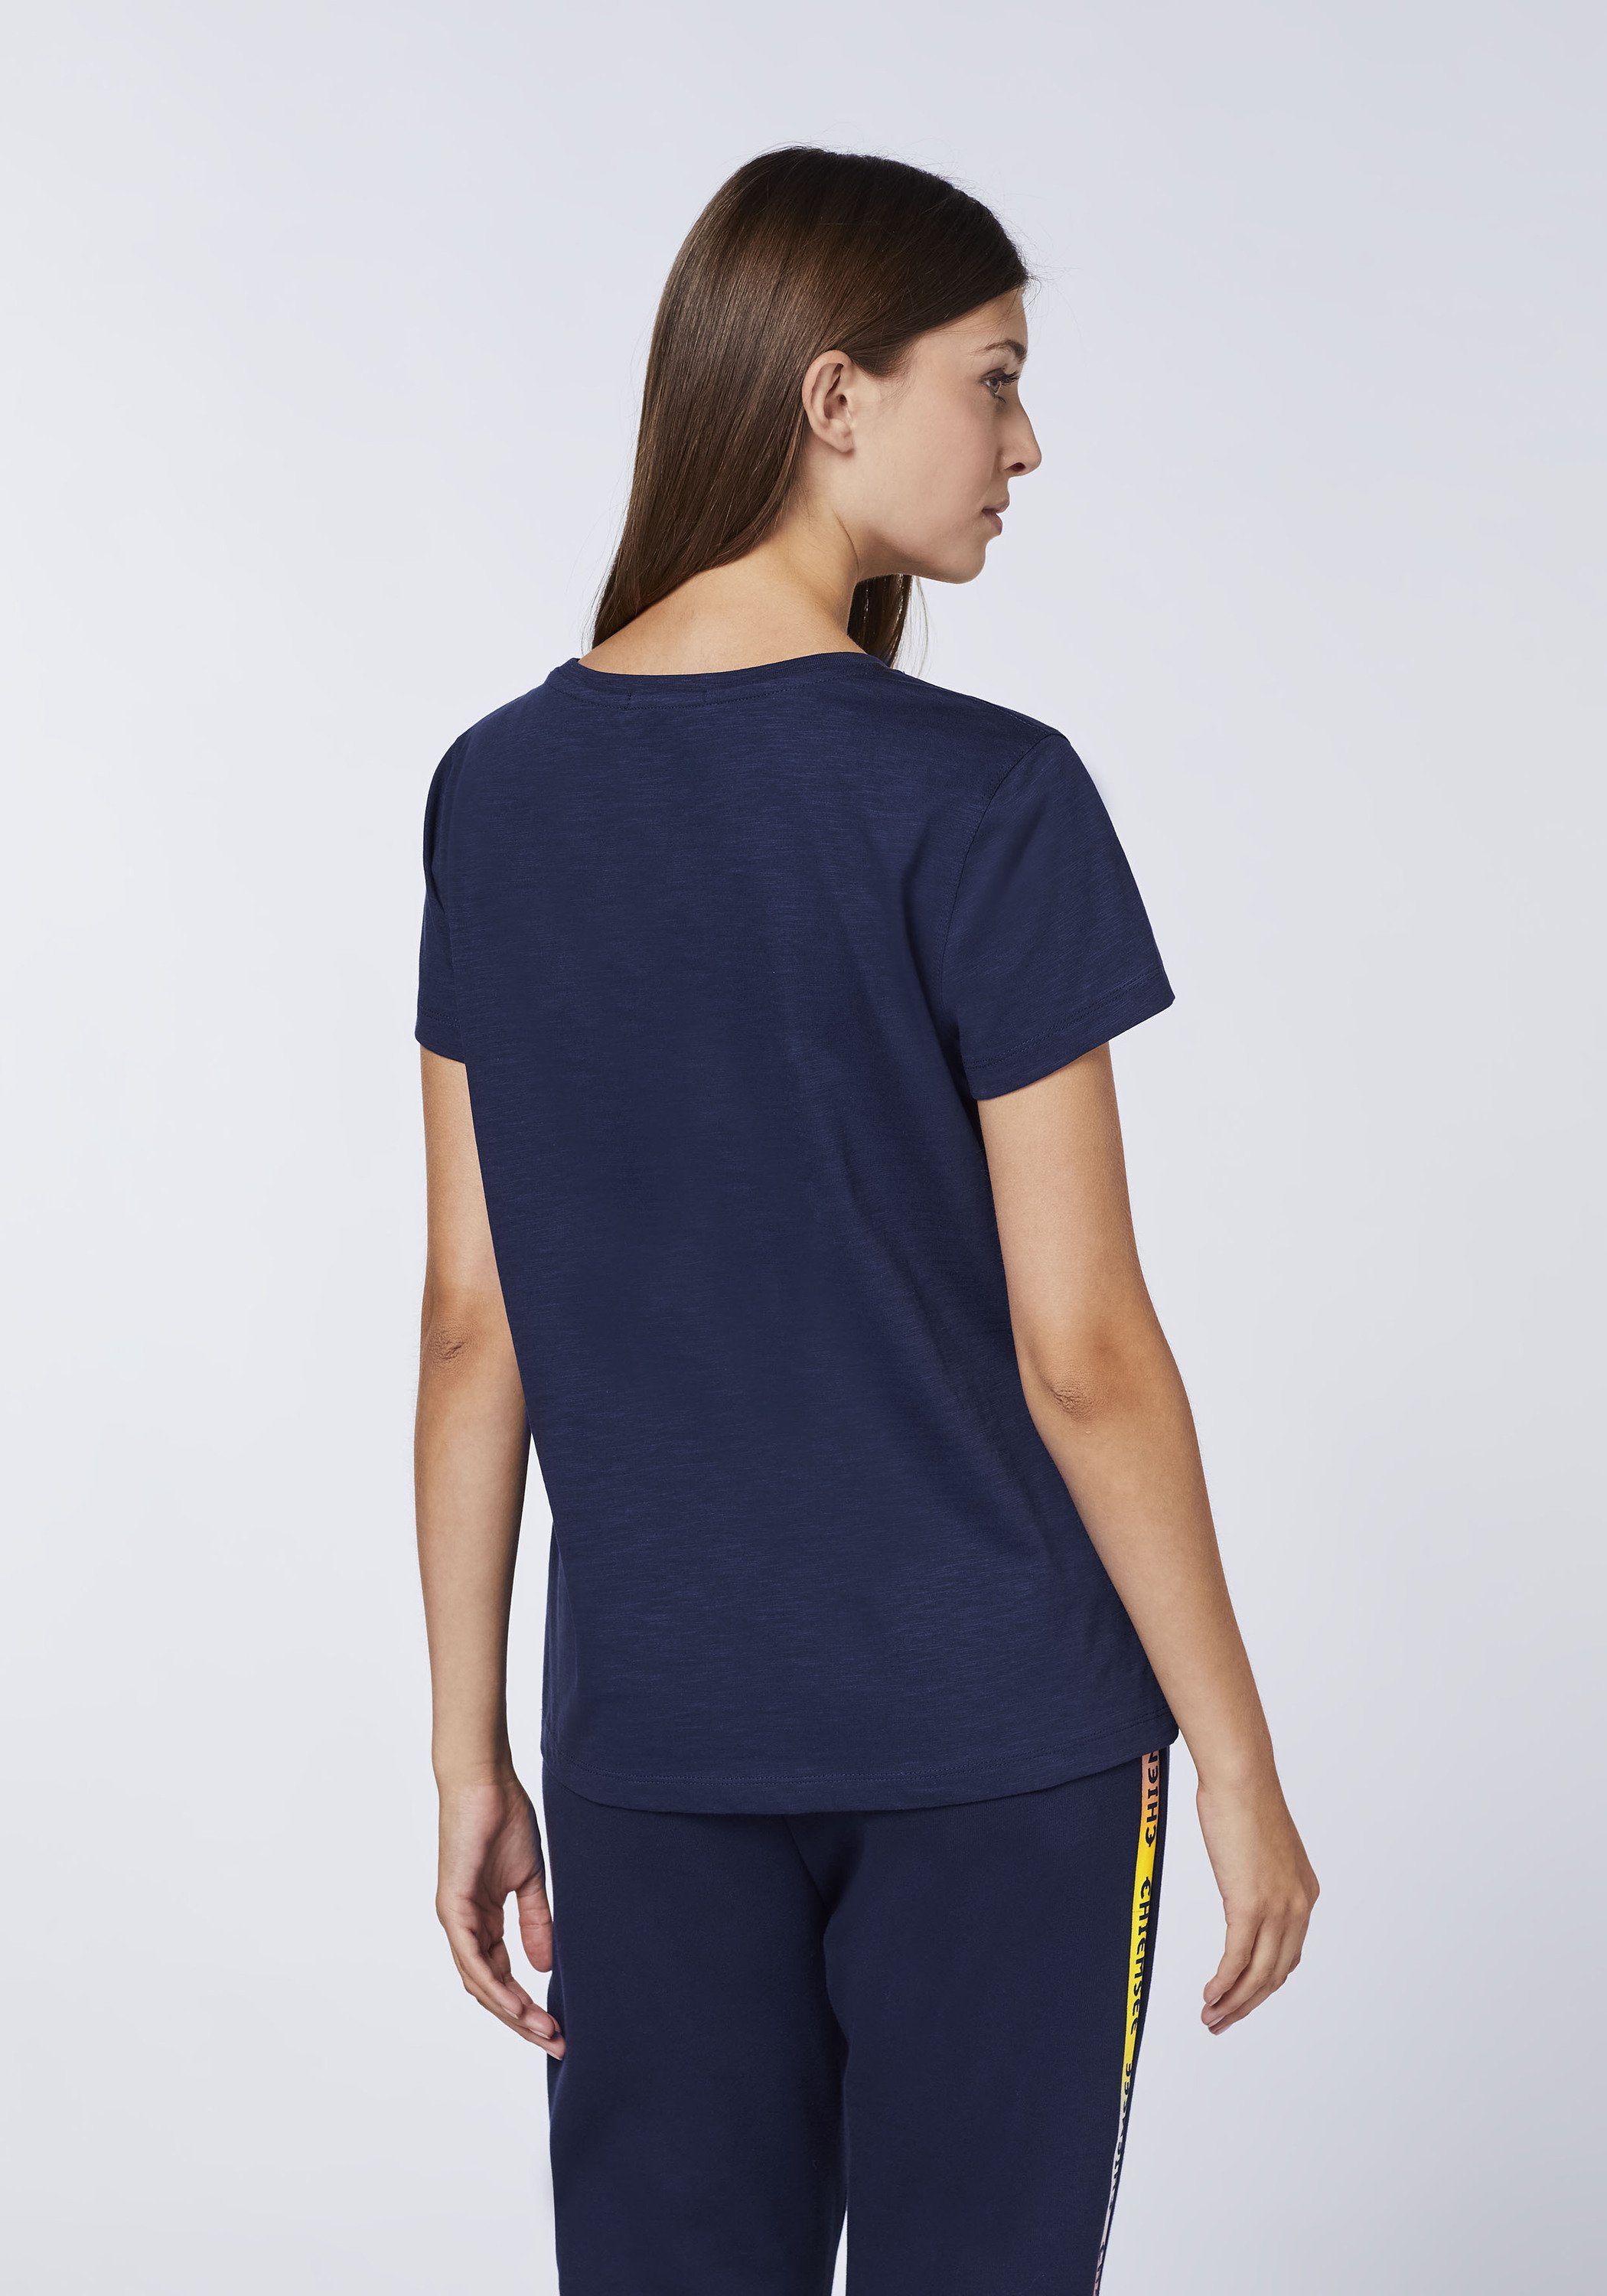 mit 19-3933 Blue T-Shirt 1 Medieval Print-Shirt Jumper-Frontprint Chiemsee